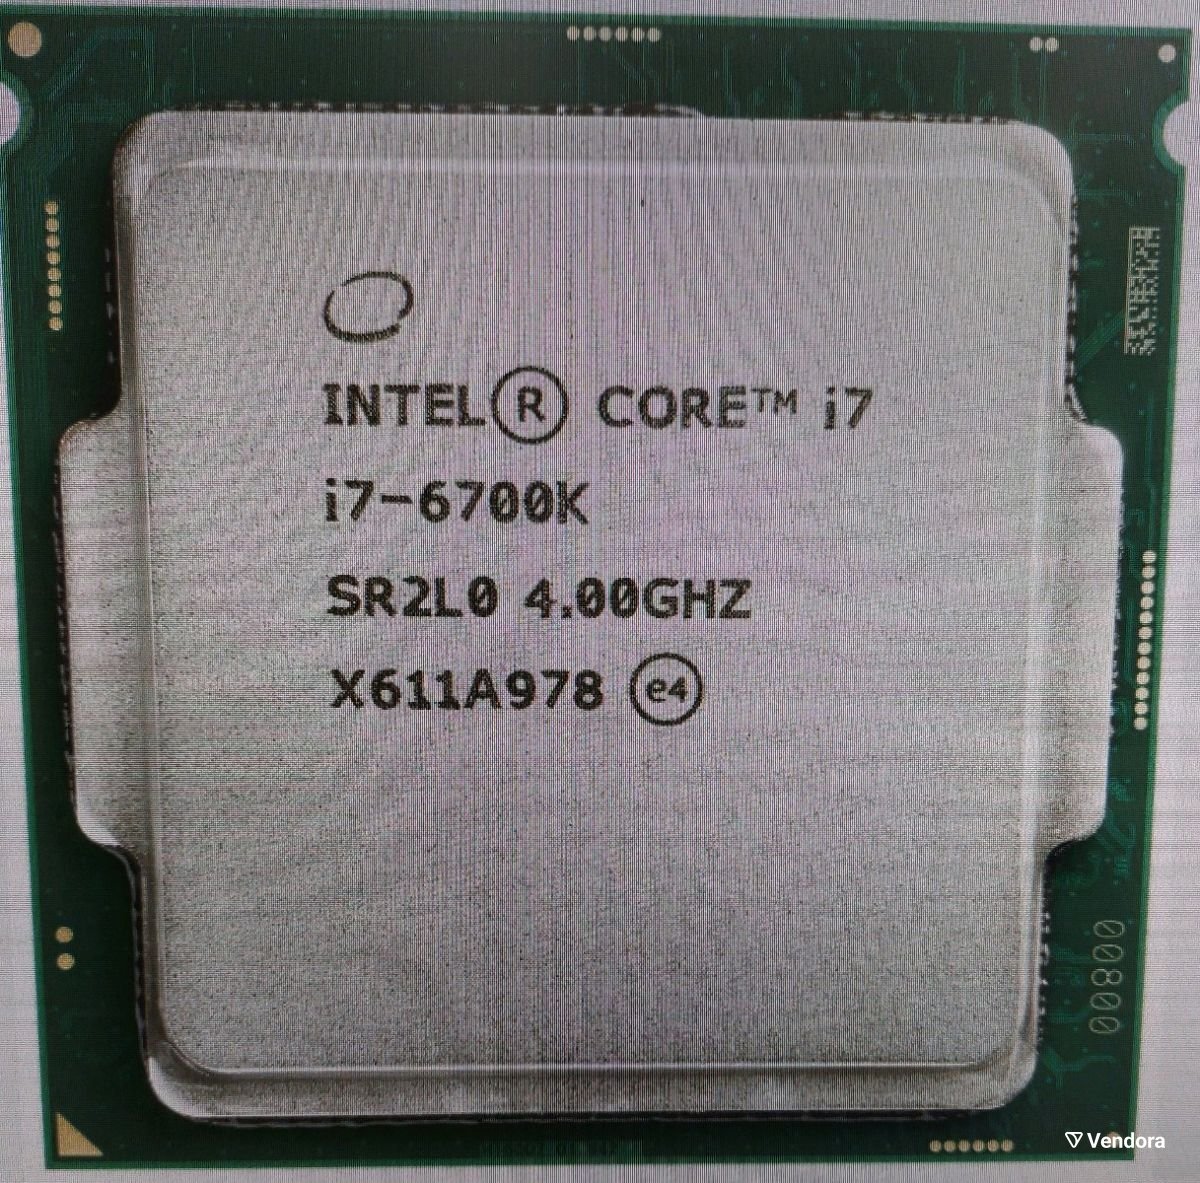 Intel core i7-6700K 4ghz LGA1151amd… - € 115,00 - Vendora